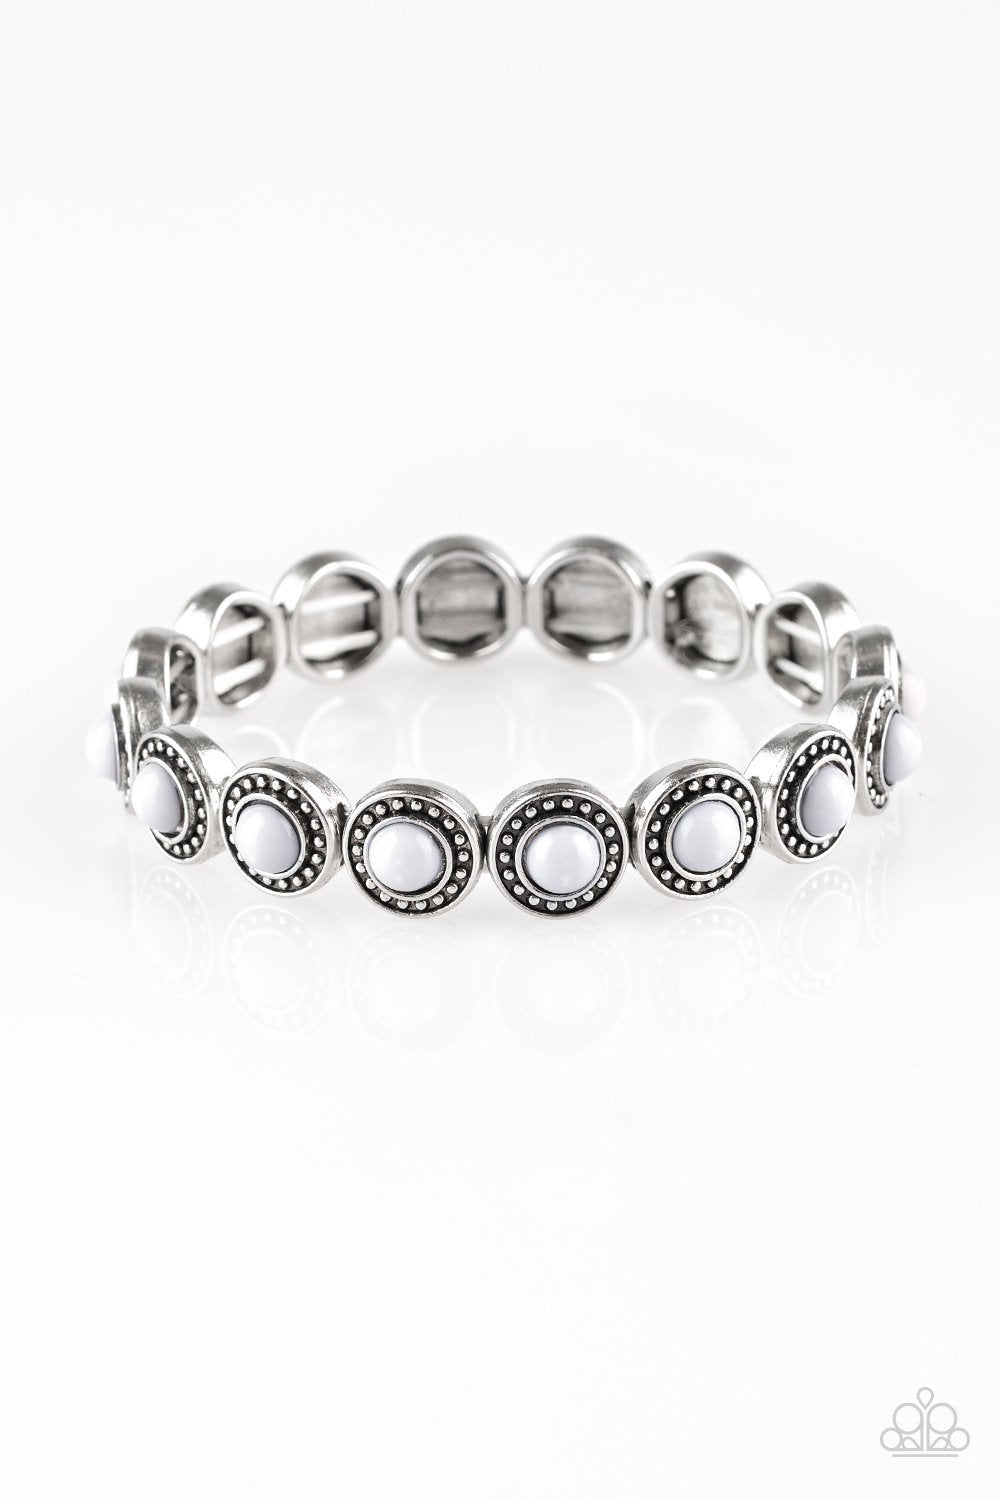 Globetrotter Goals Silver Bracelet - Paparazzi Accessories - lightbox -CarasShop.com - $5 Jewelry by Cara Jewels